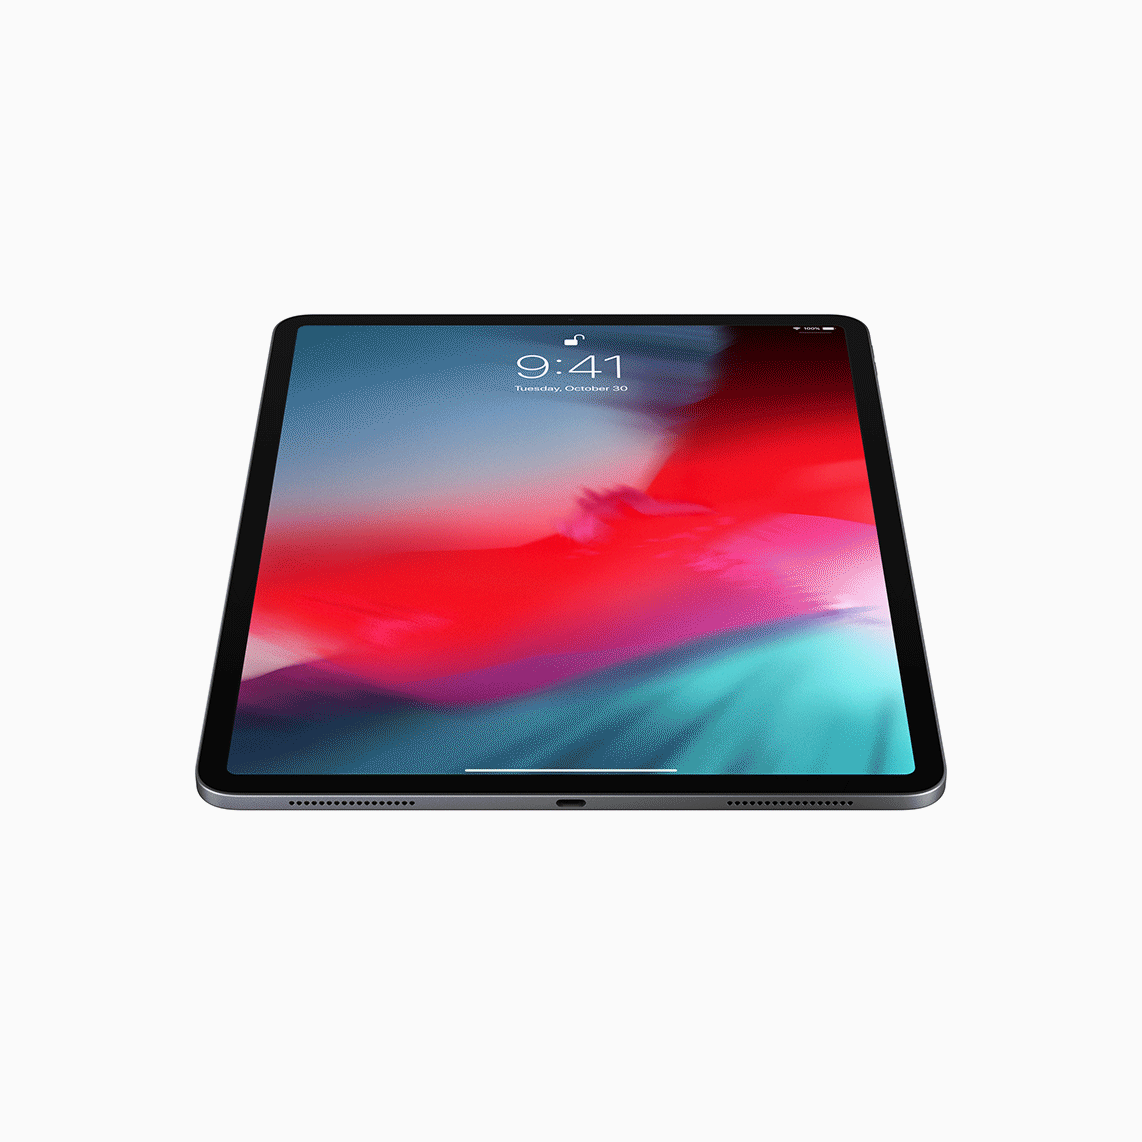 iPad Pro Display Change